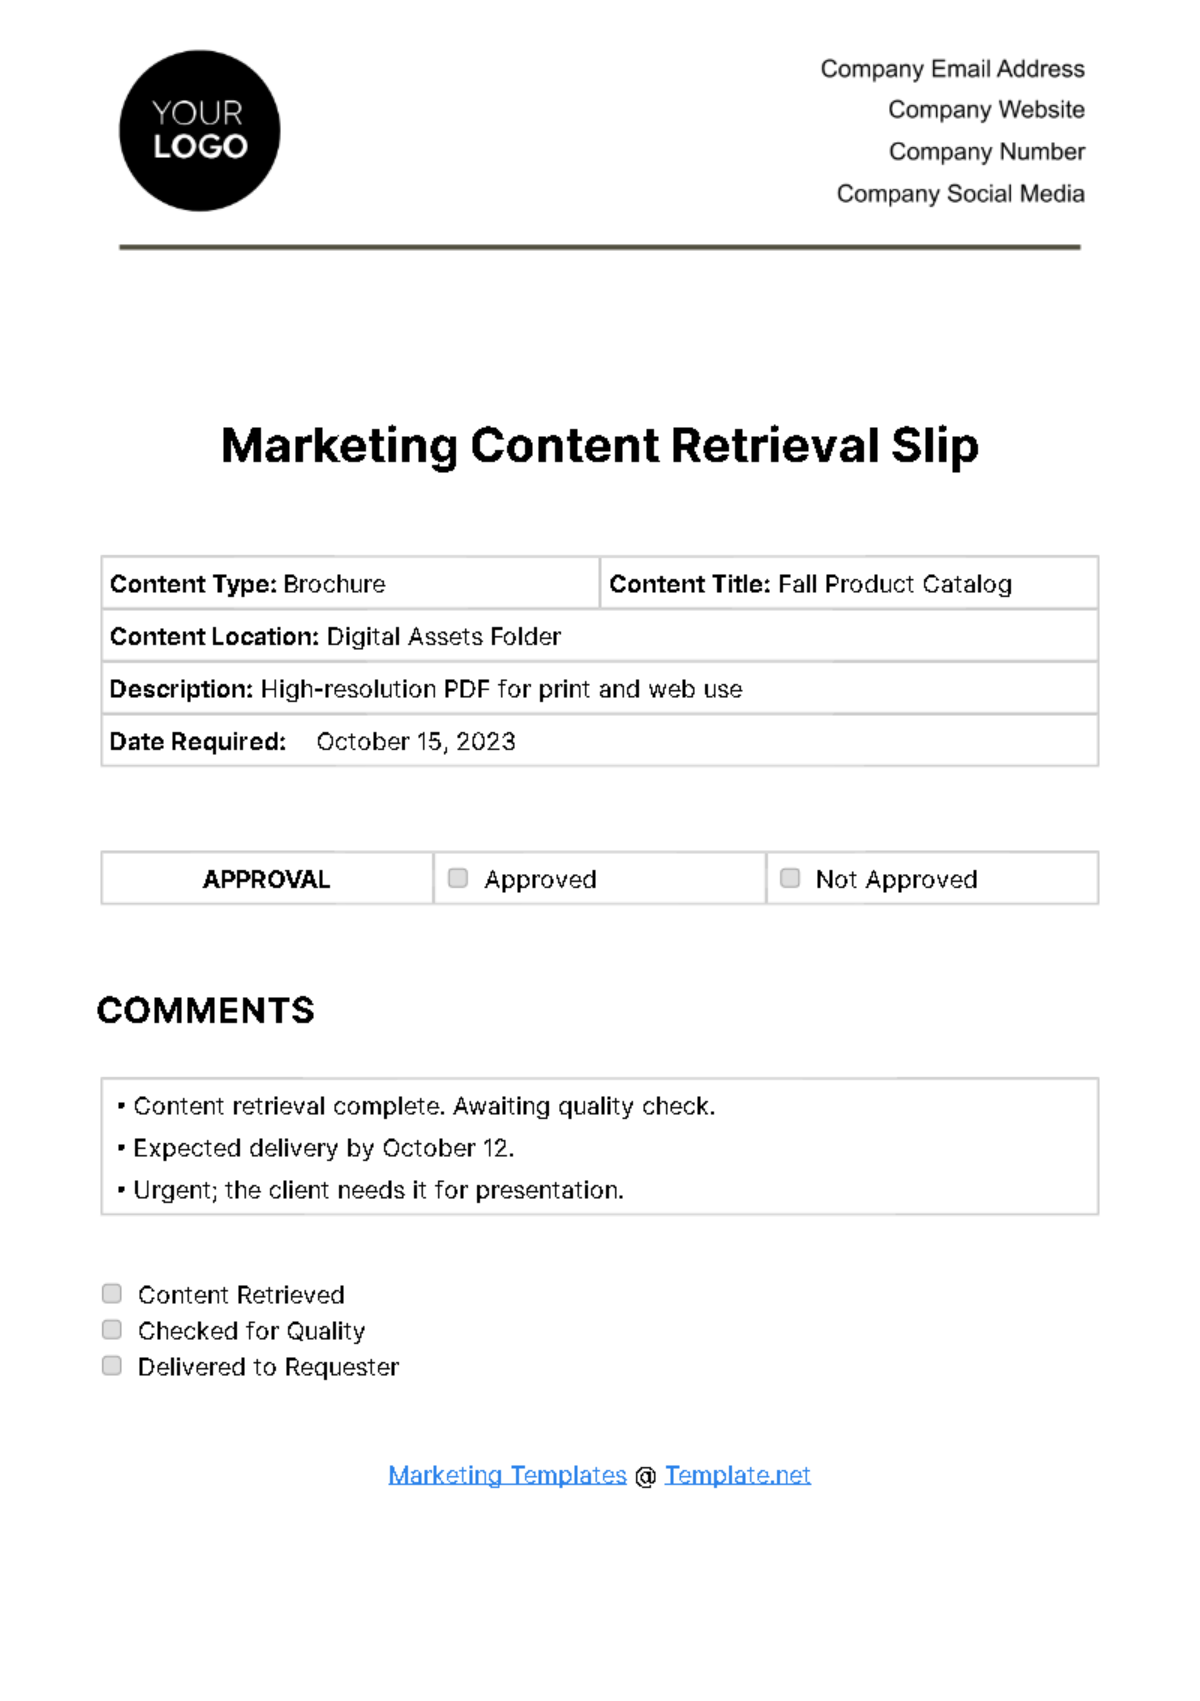 Marketing Content Retrieval Slip Template